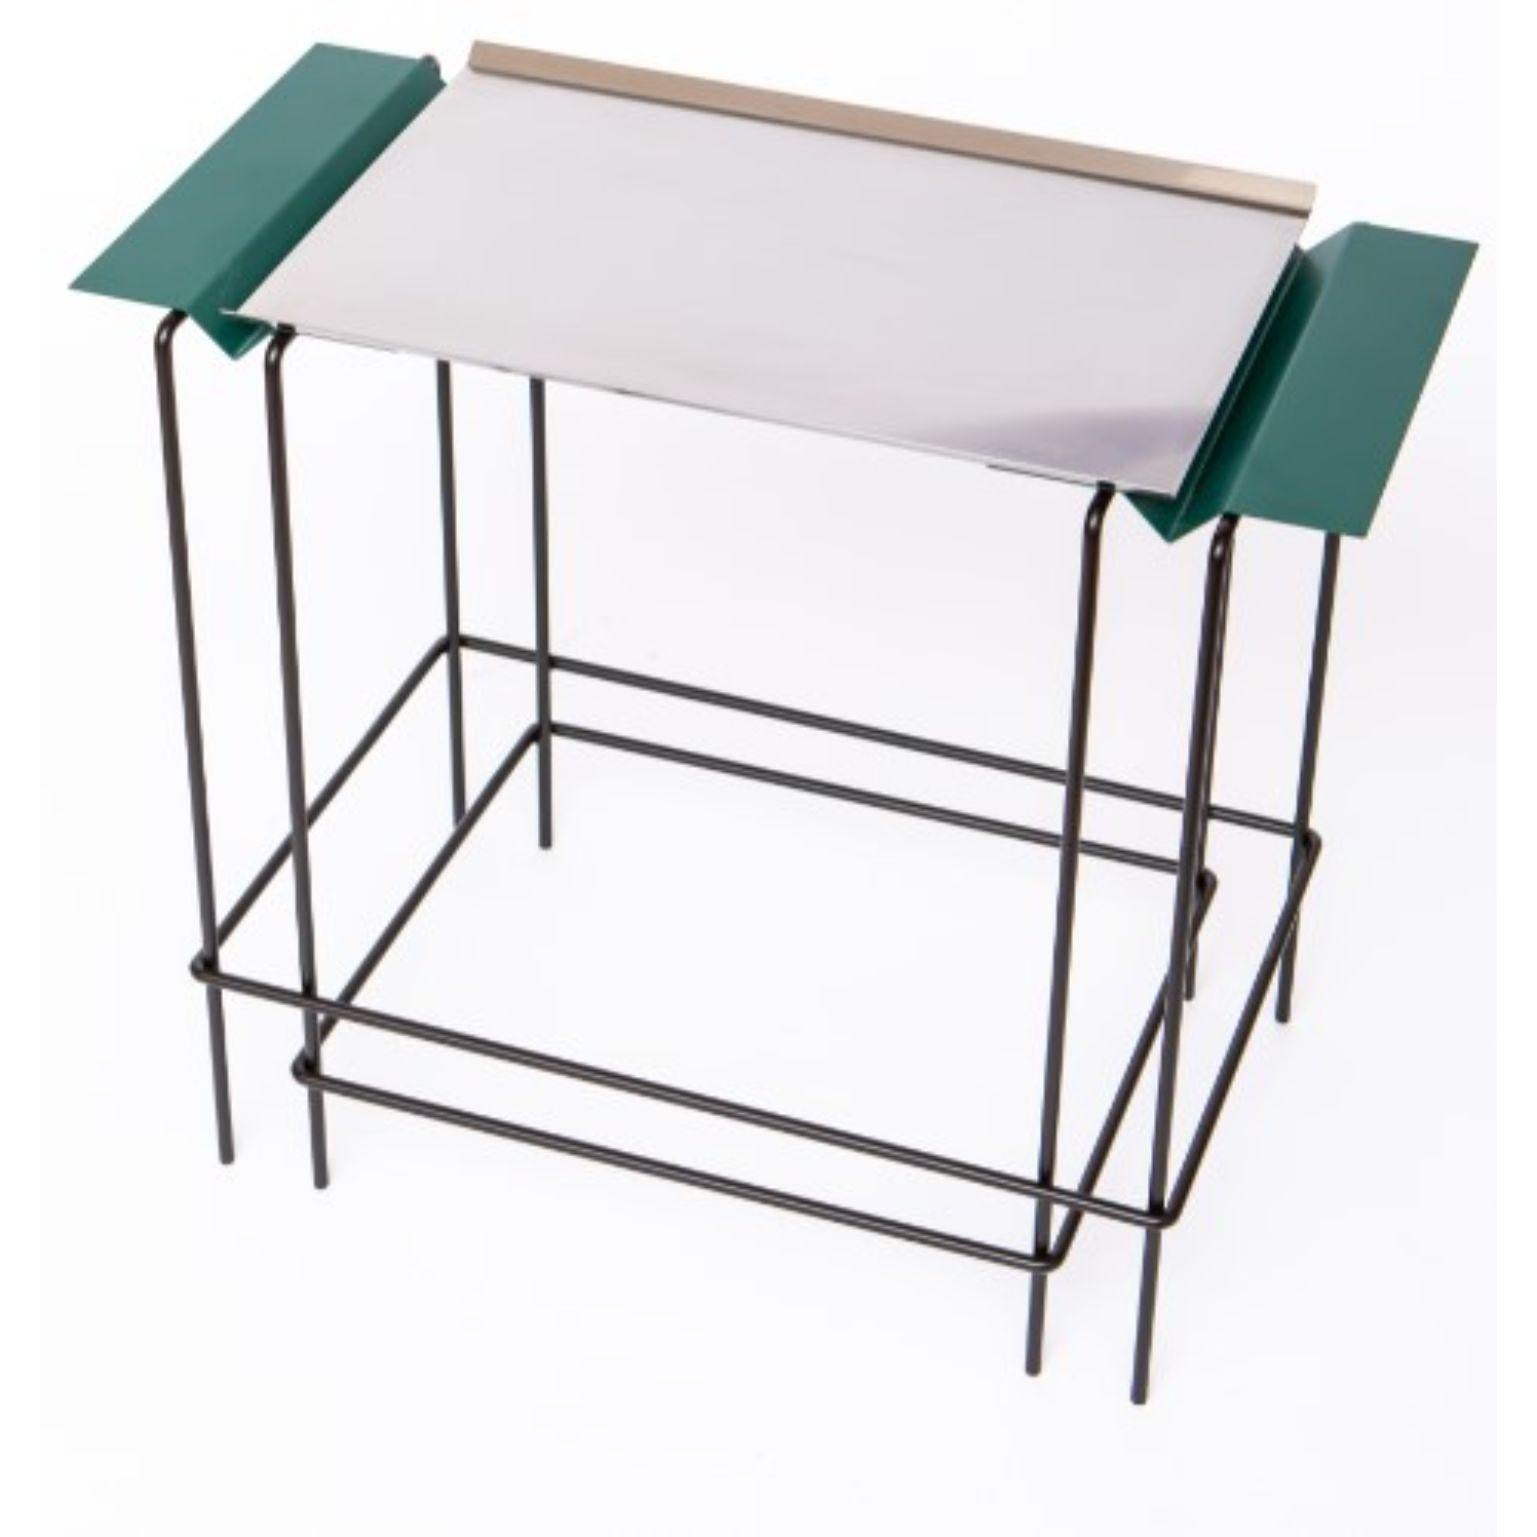 Modern Leva 50 - Table by Alva Design